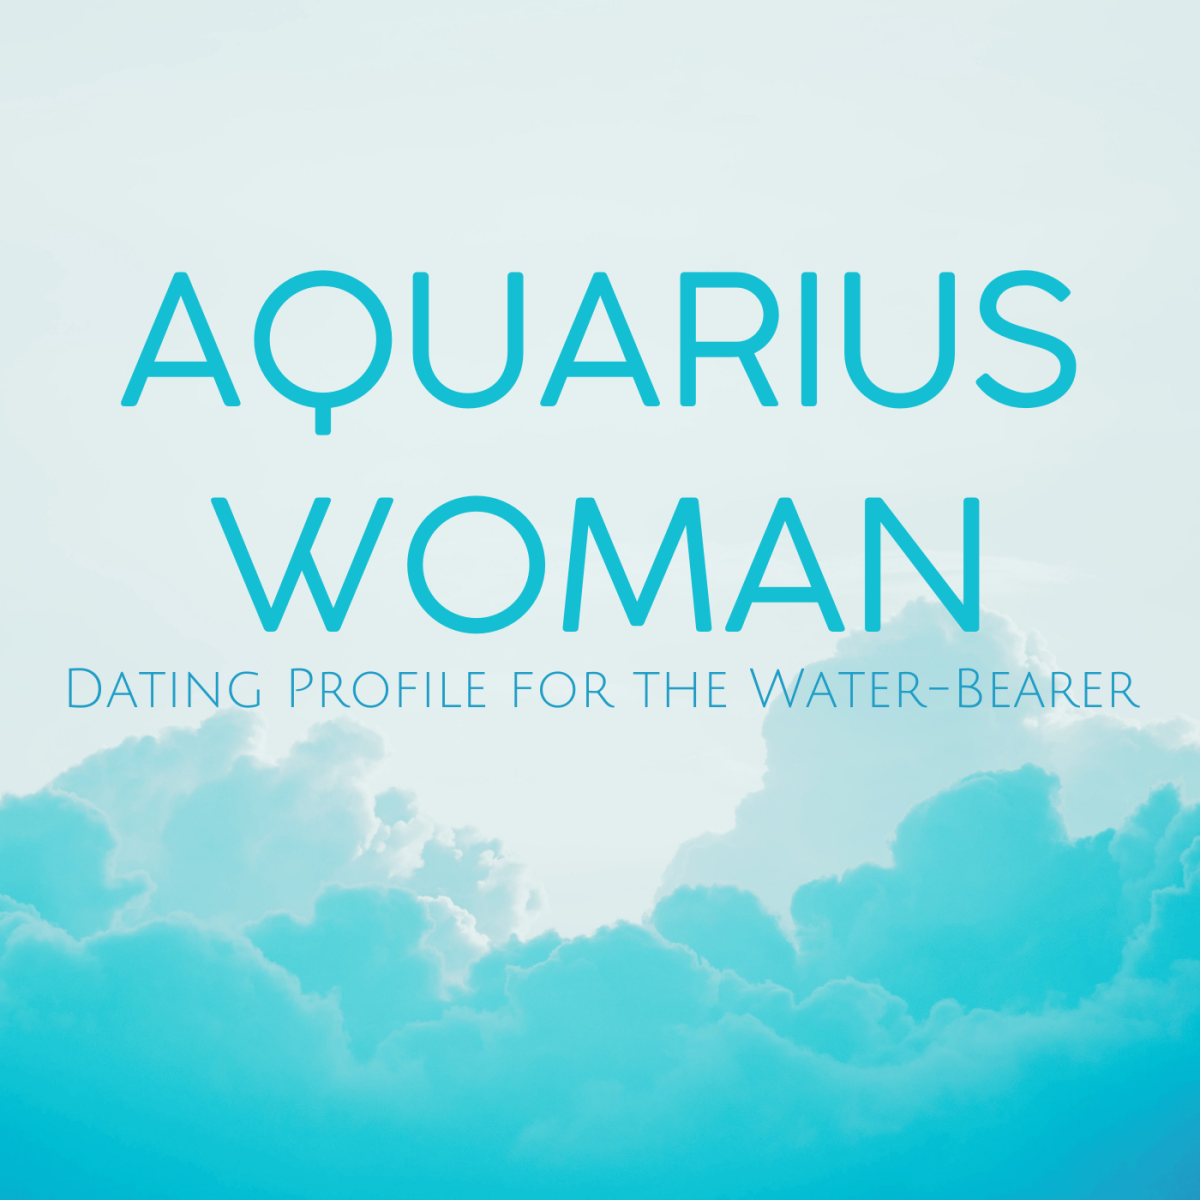 Explore this humorous look at dating a female Aquarius!